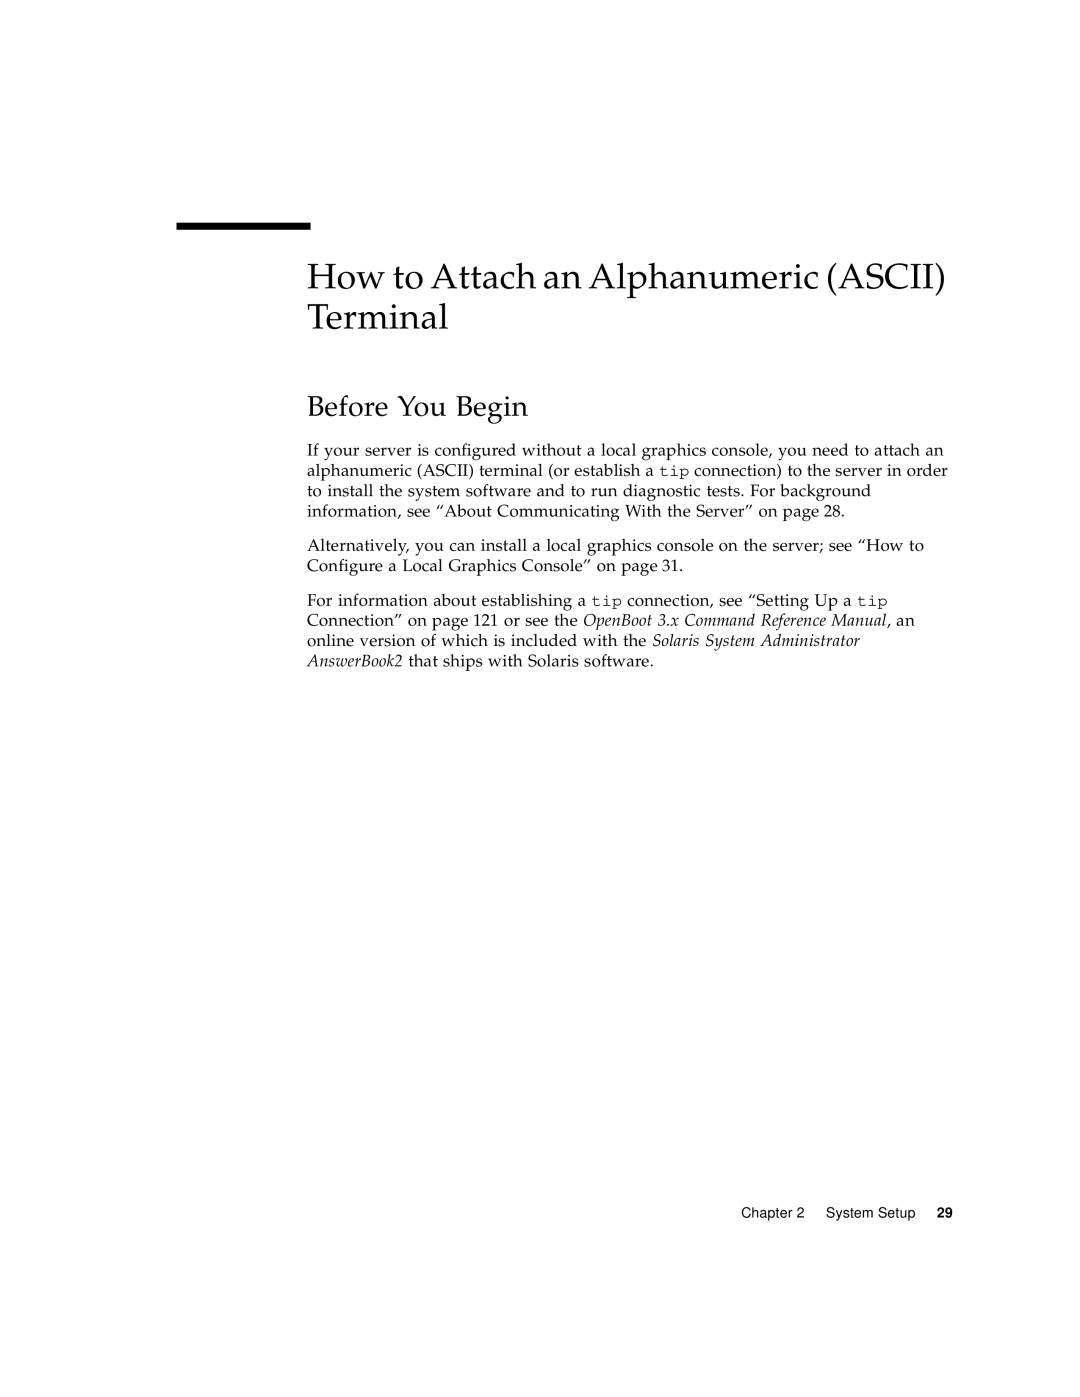 Sun Microsystems 220R manual How to Attach an Alphanumeric ASCII Terminal, Before You Begin 